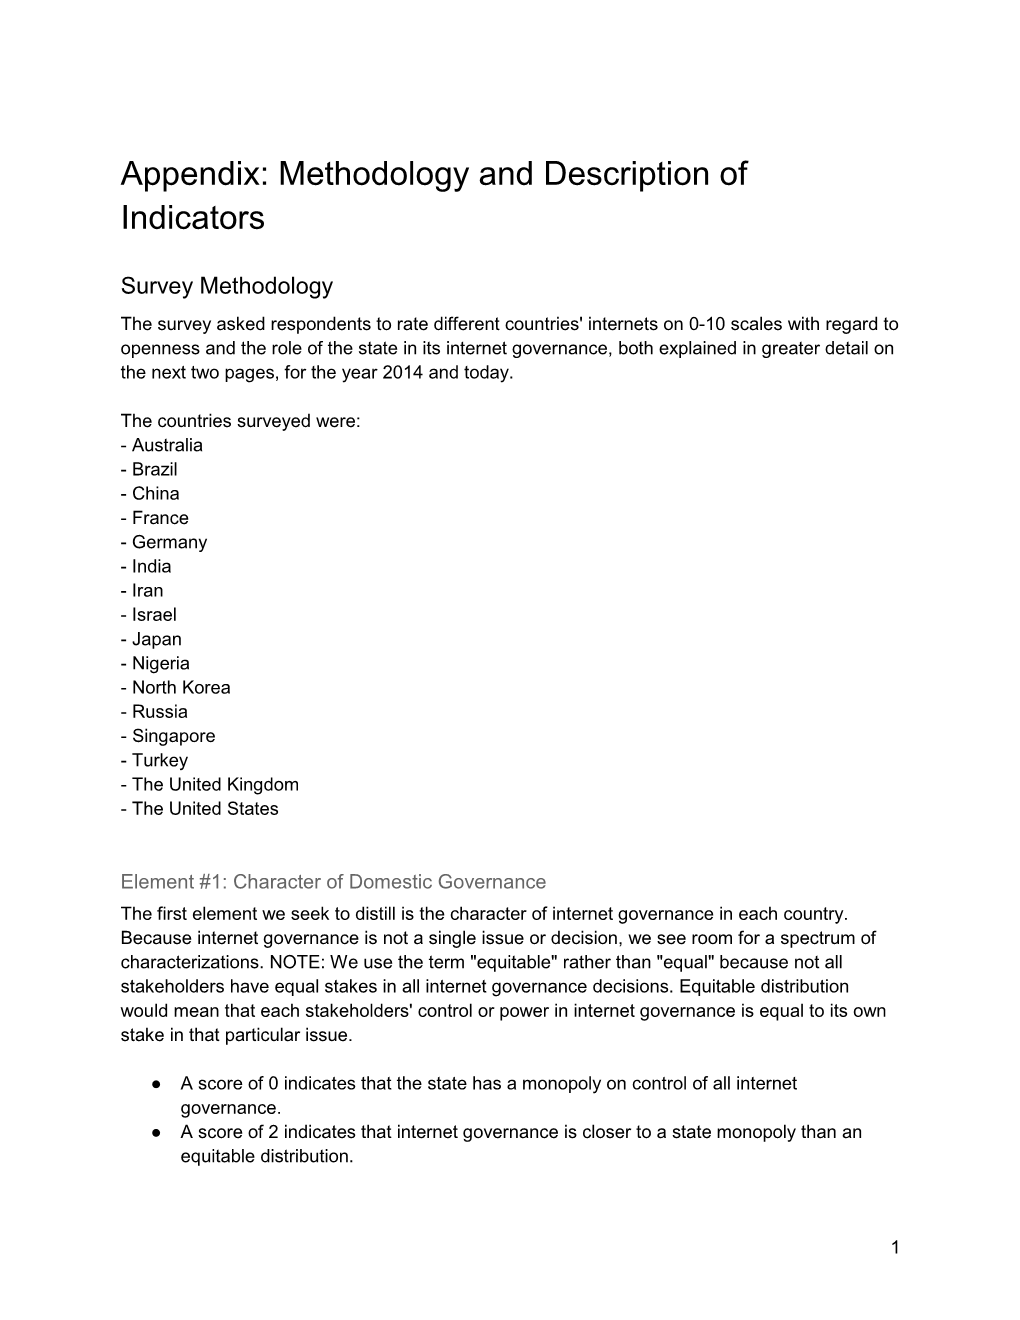 Appendix: Methodology and Description of Indicators